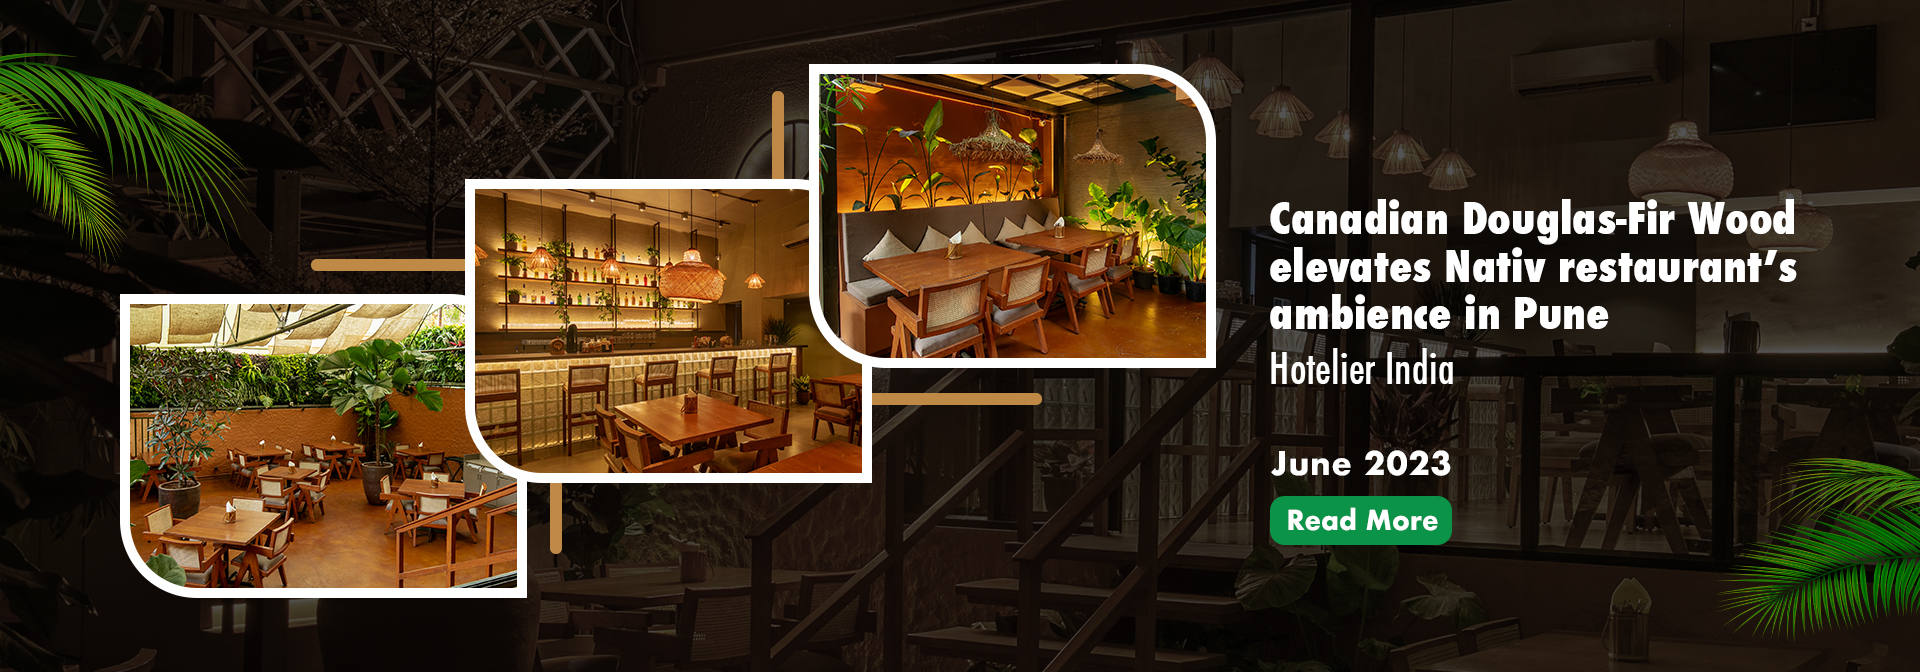 Canadian Dauglas-Fir Wood elevates Nativ Restaurants ambience in Pune